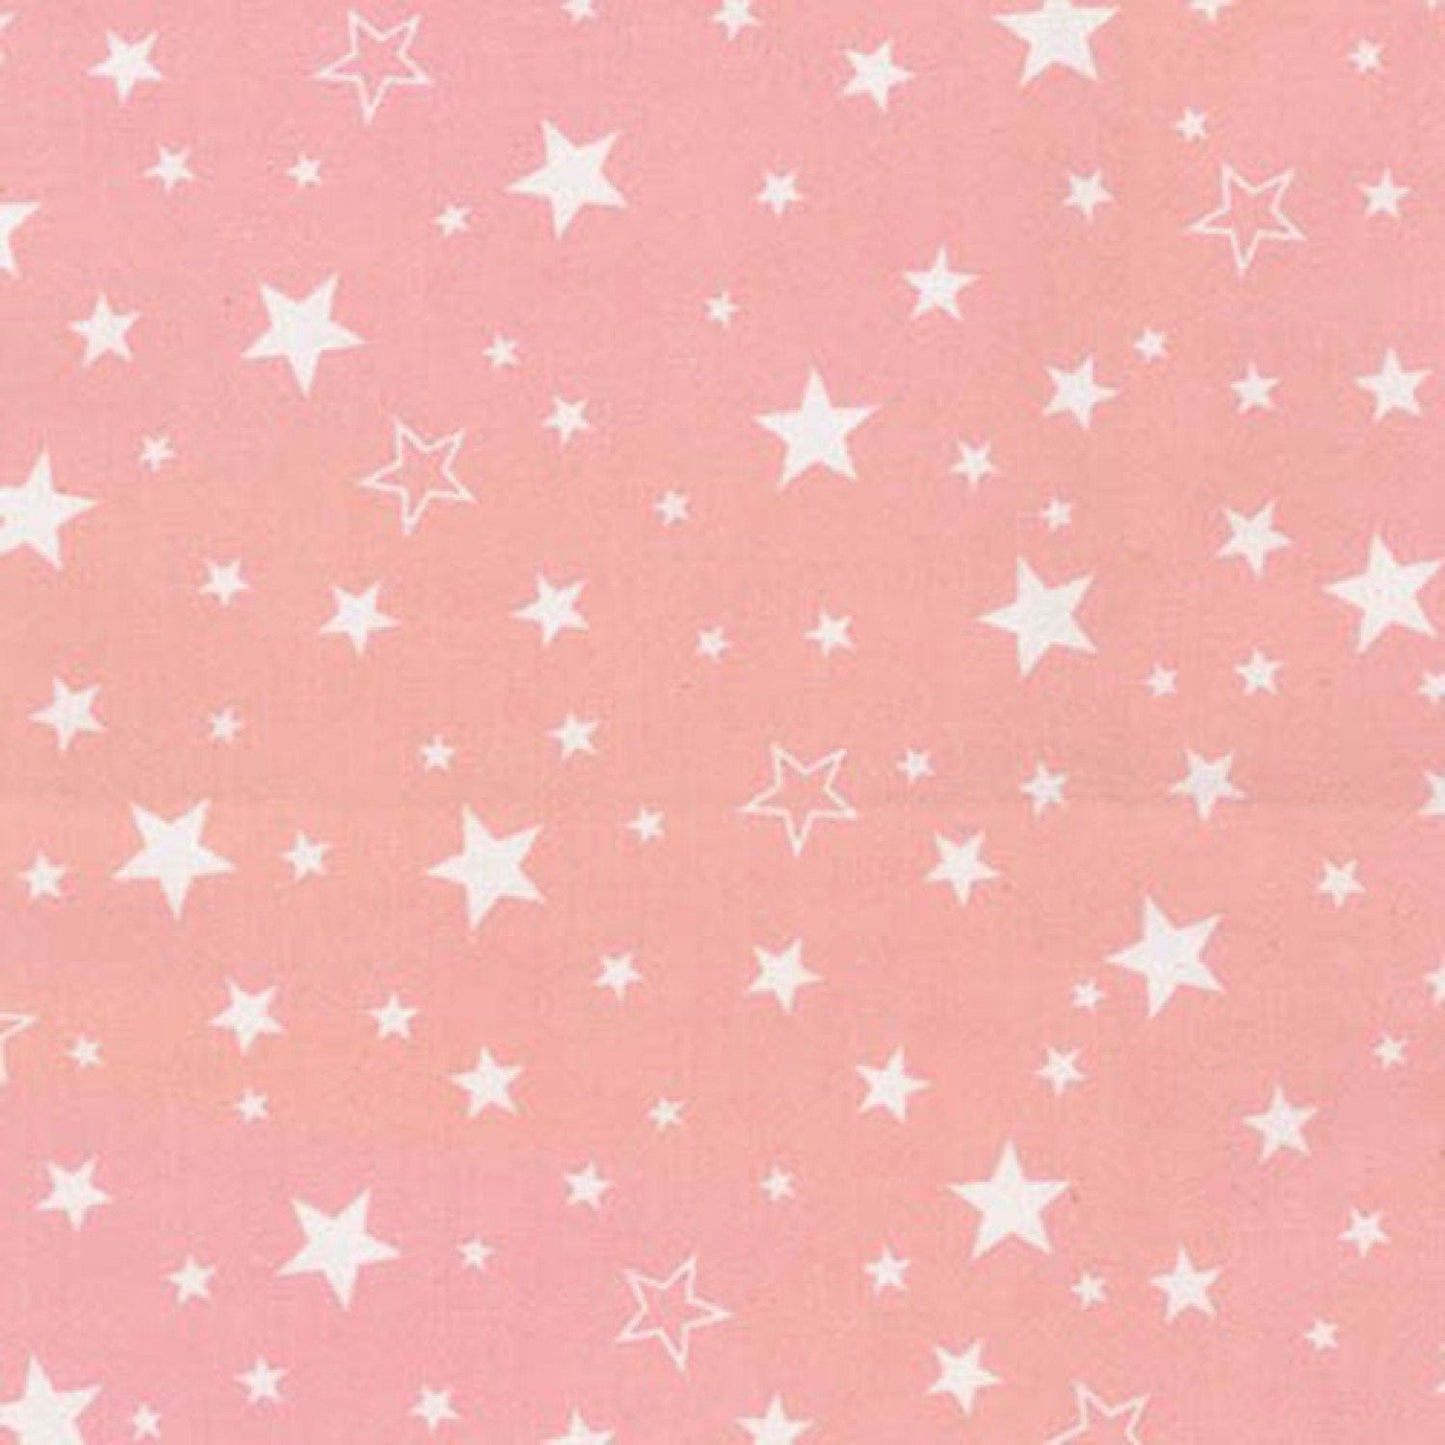 Robert Kaufman Fabric 2 yards (72"x44") / Pink Stars Cozy Cotton FLANNEL by Robert Kaufman Pink Stars or Navy Stars, Celestial Flannel